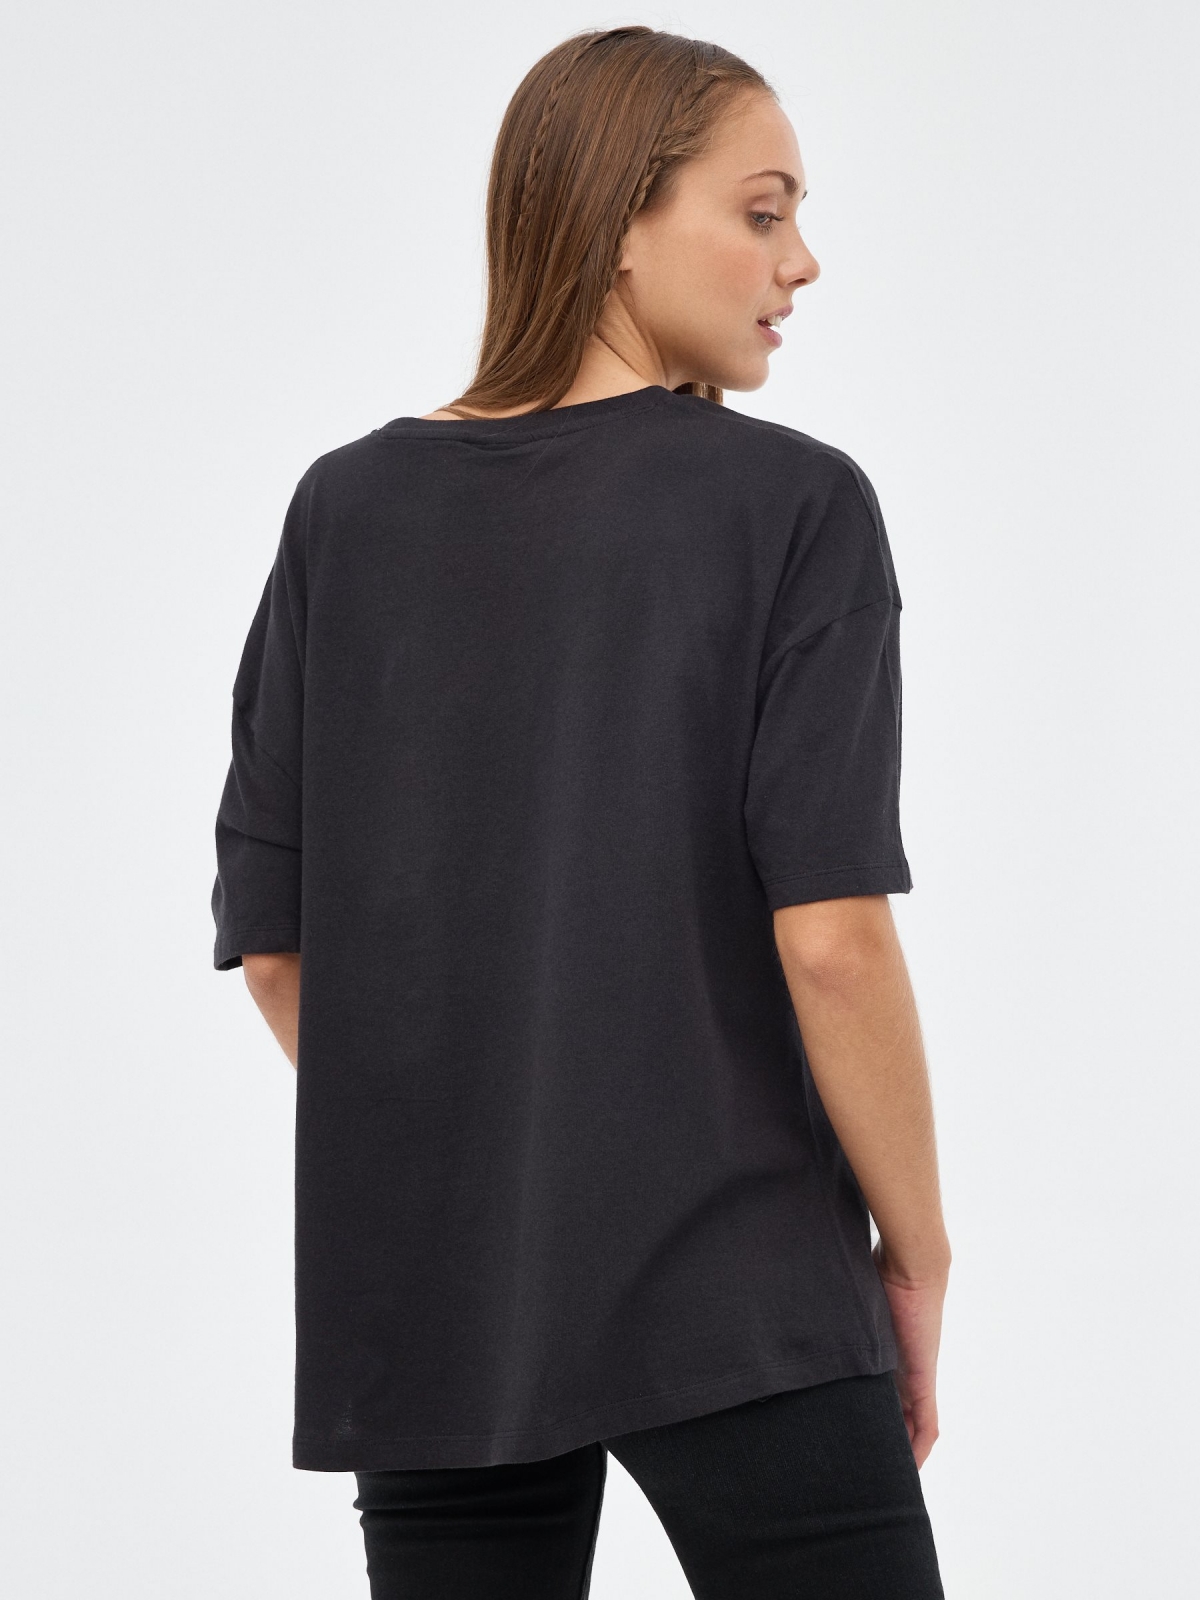 Hatsun oversized T-shirt black middle back view